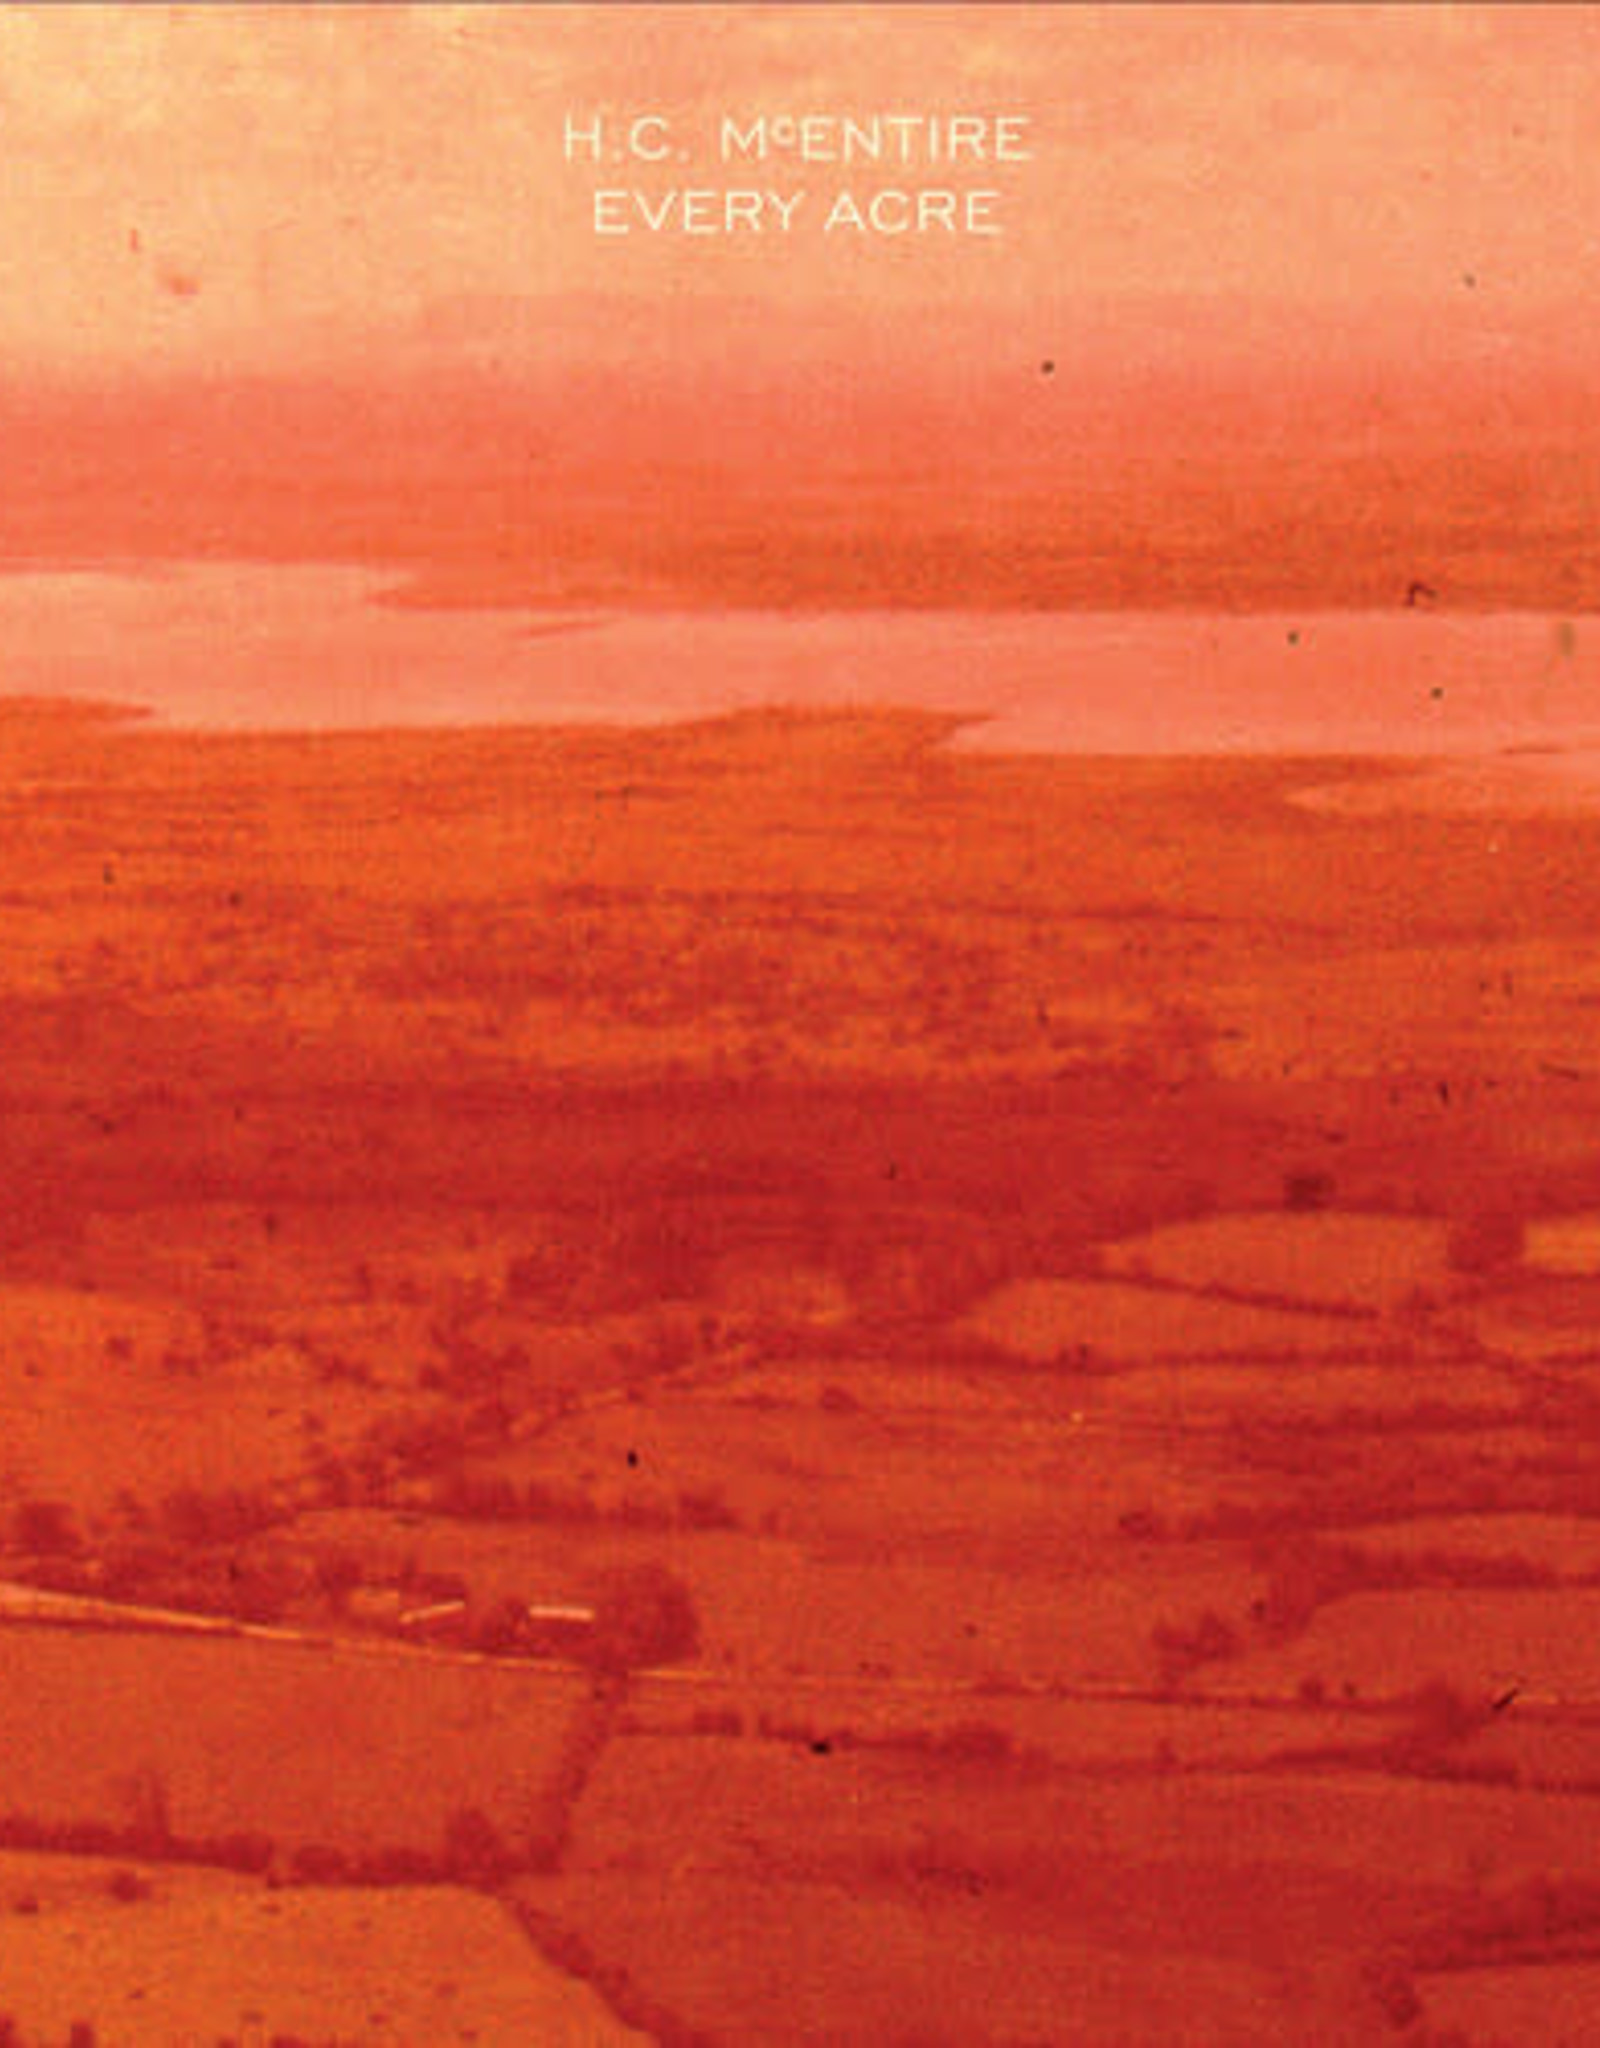 H.C. McEntire - Every Acre (Orange Vinyl)